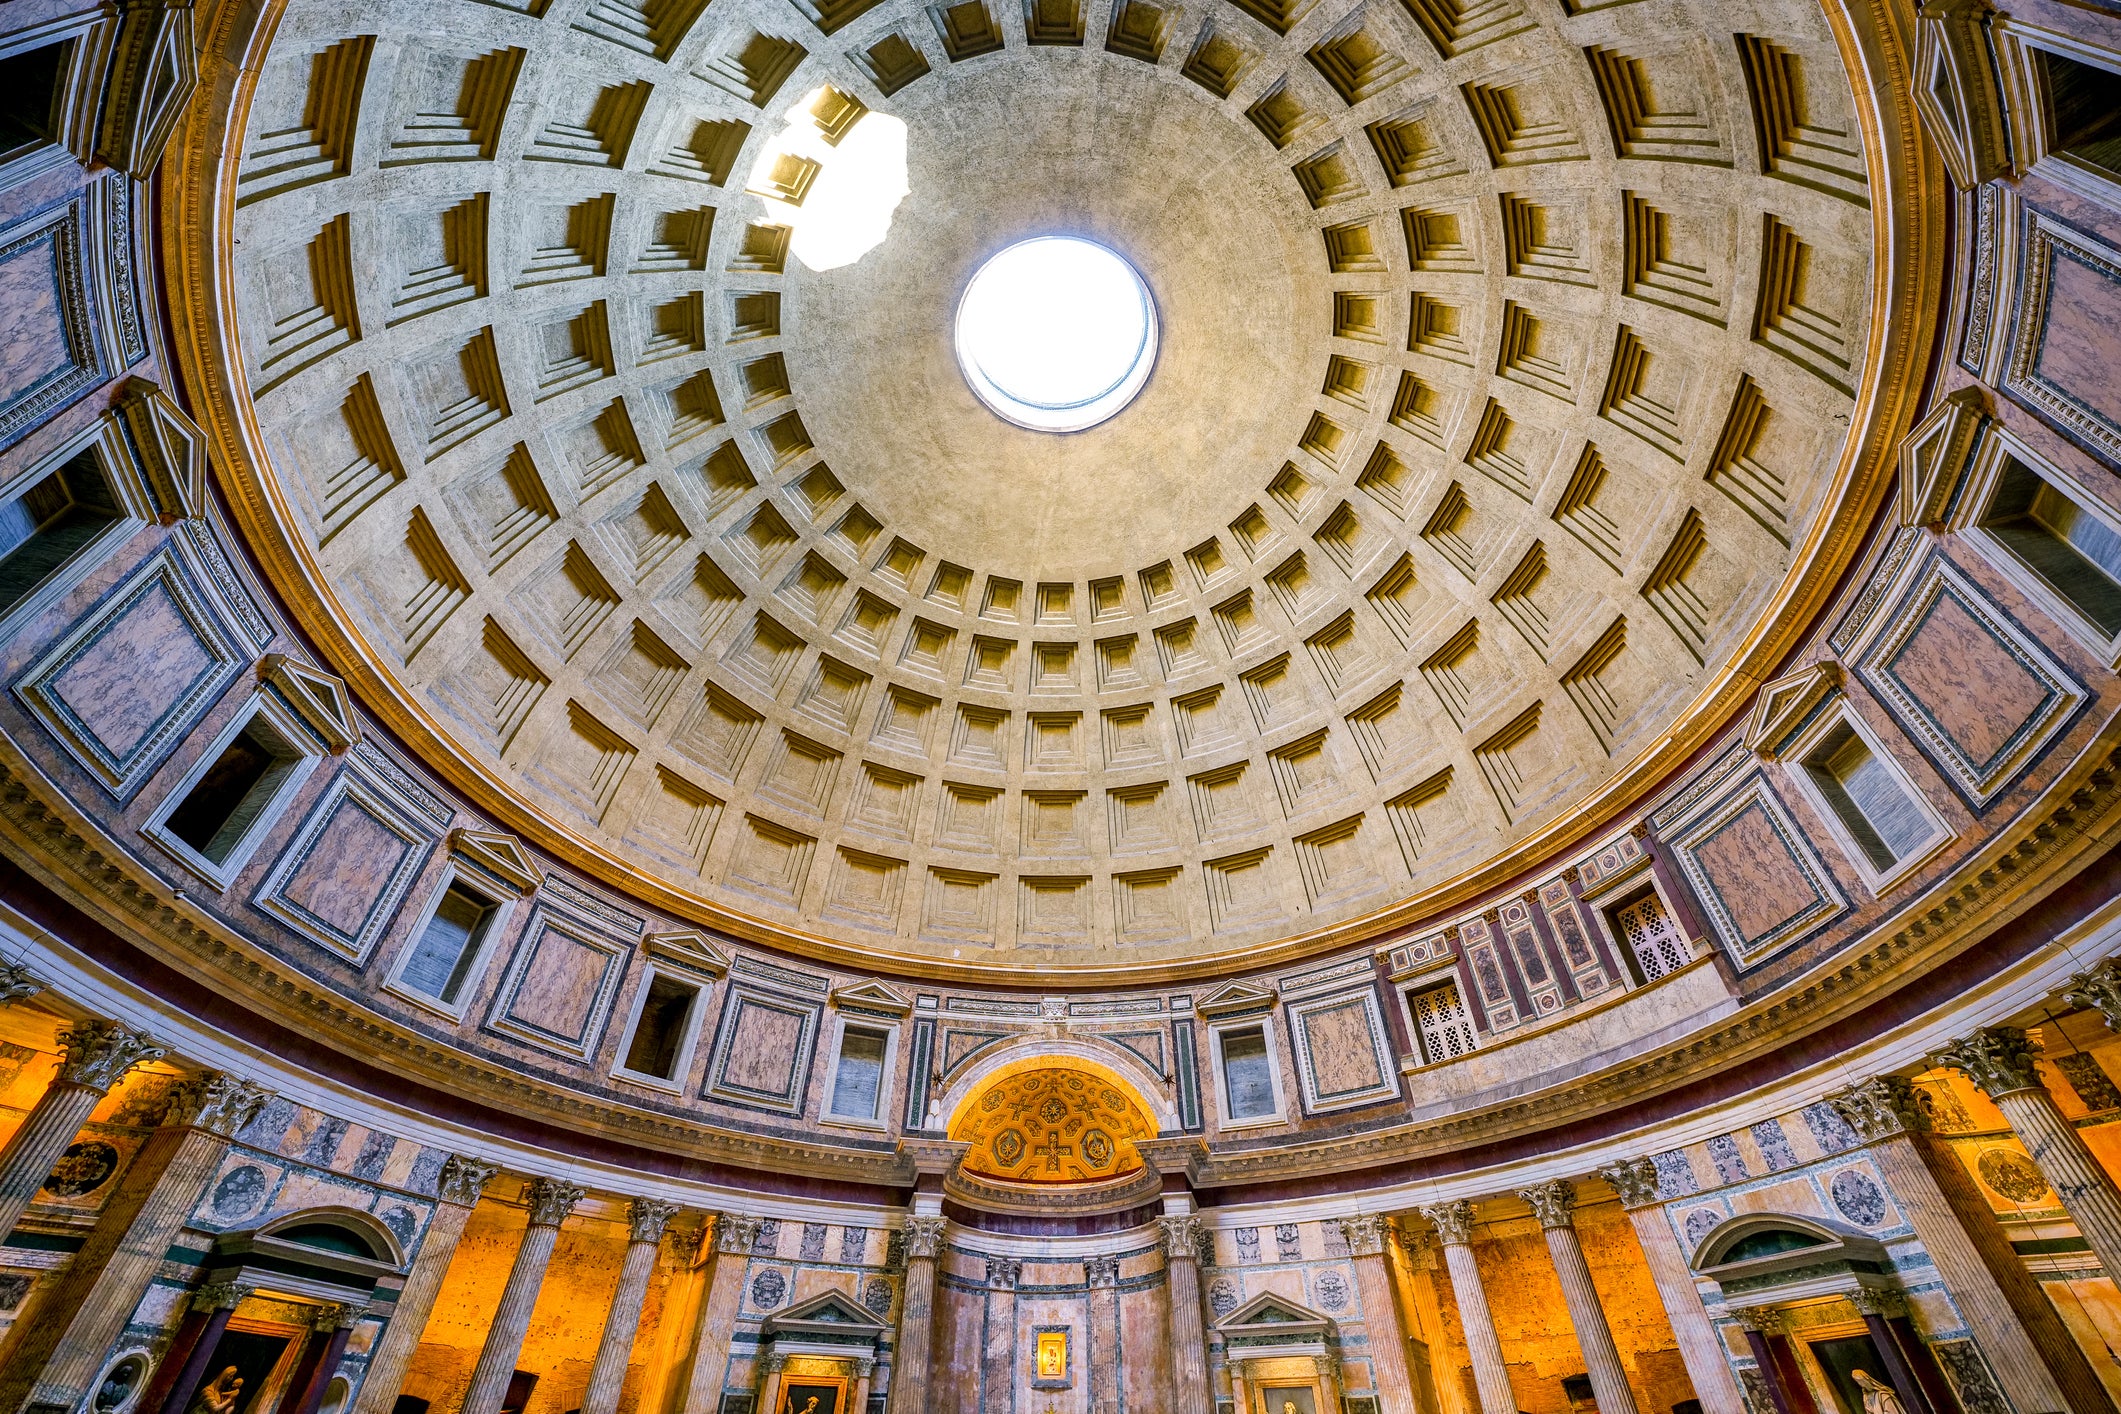 The interior of the majestic Roman Pantheon